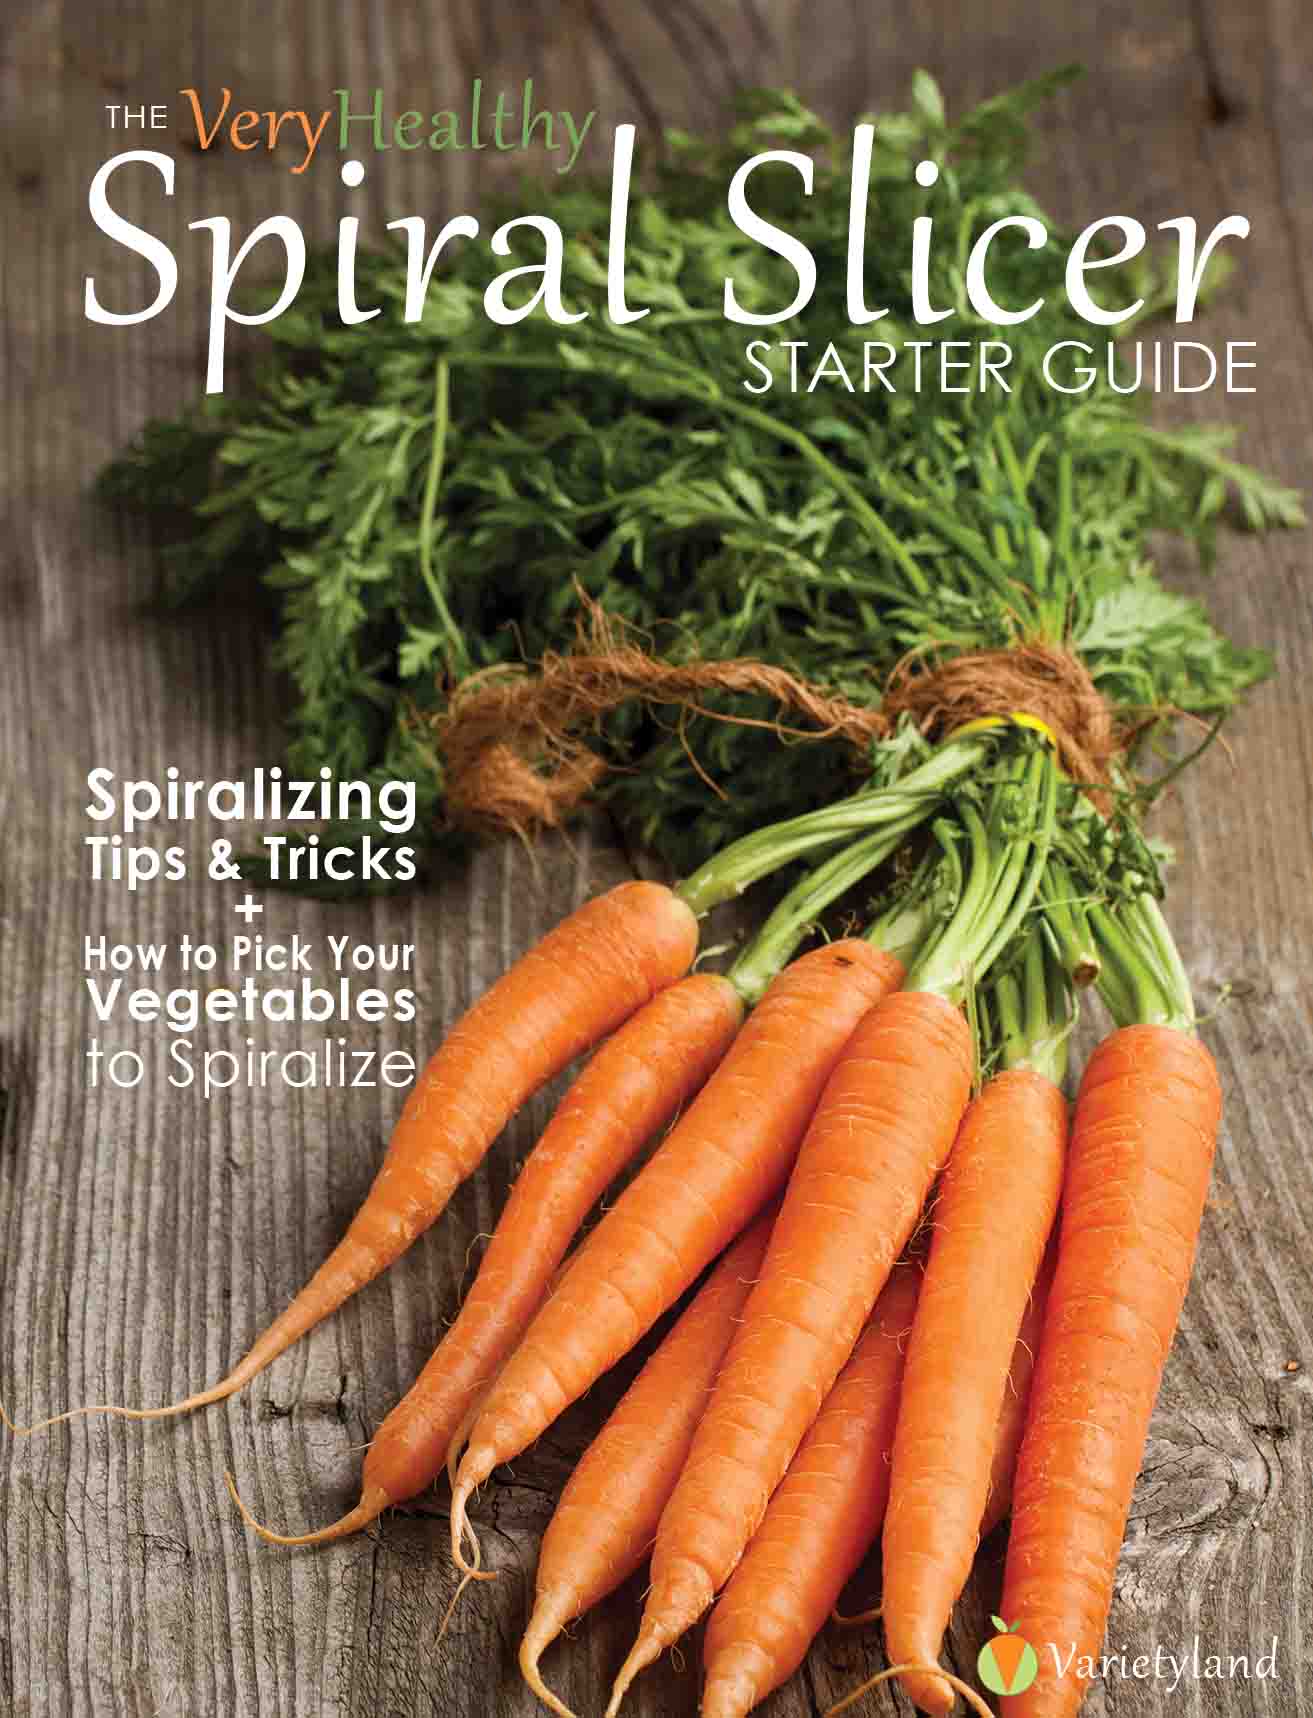 Very Healthy Spiral Slicer Cookbook (Bonus)